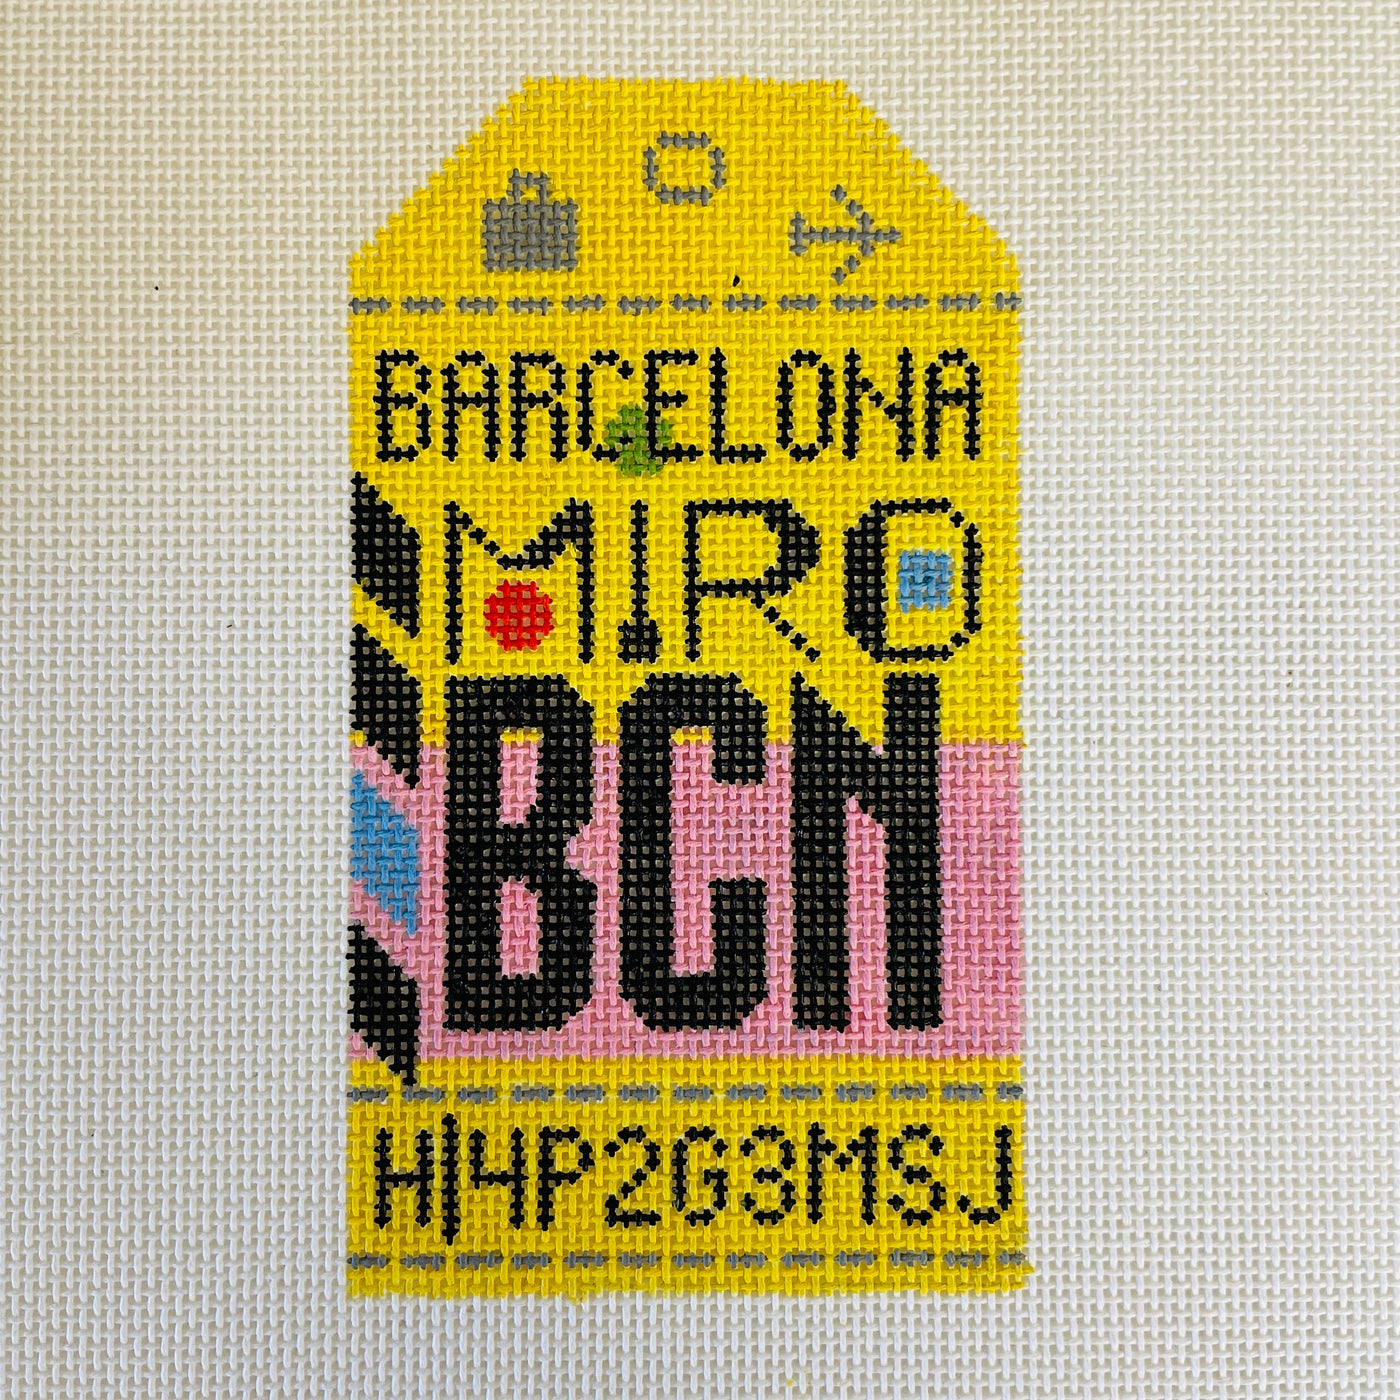 Barcelona BCN Travel Tag Needlepoint Canvas